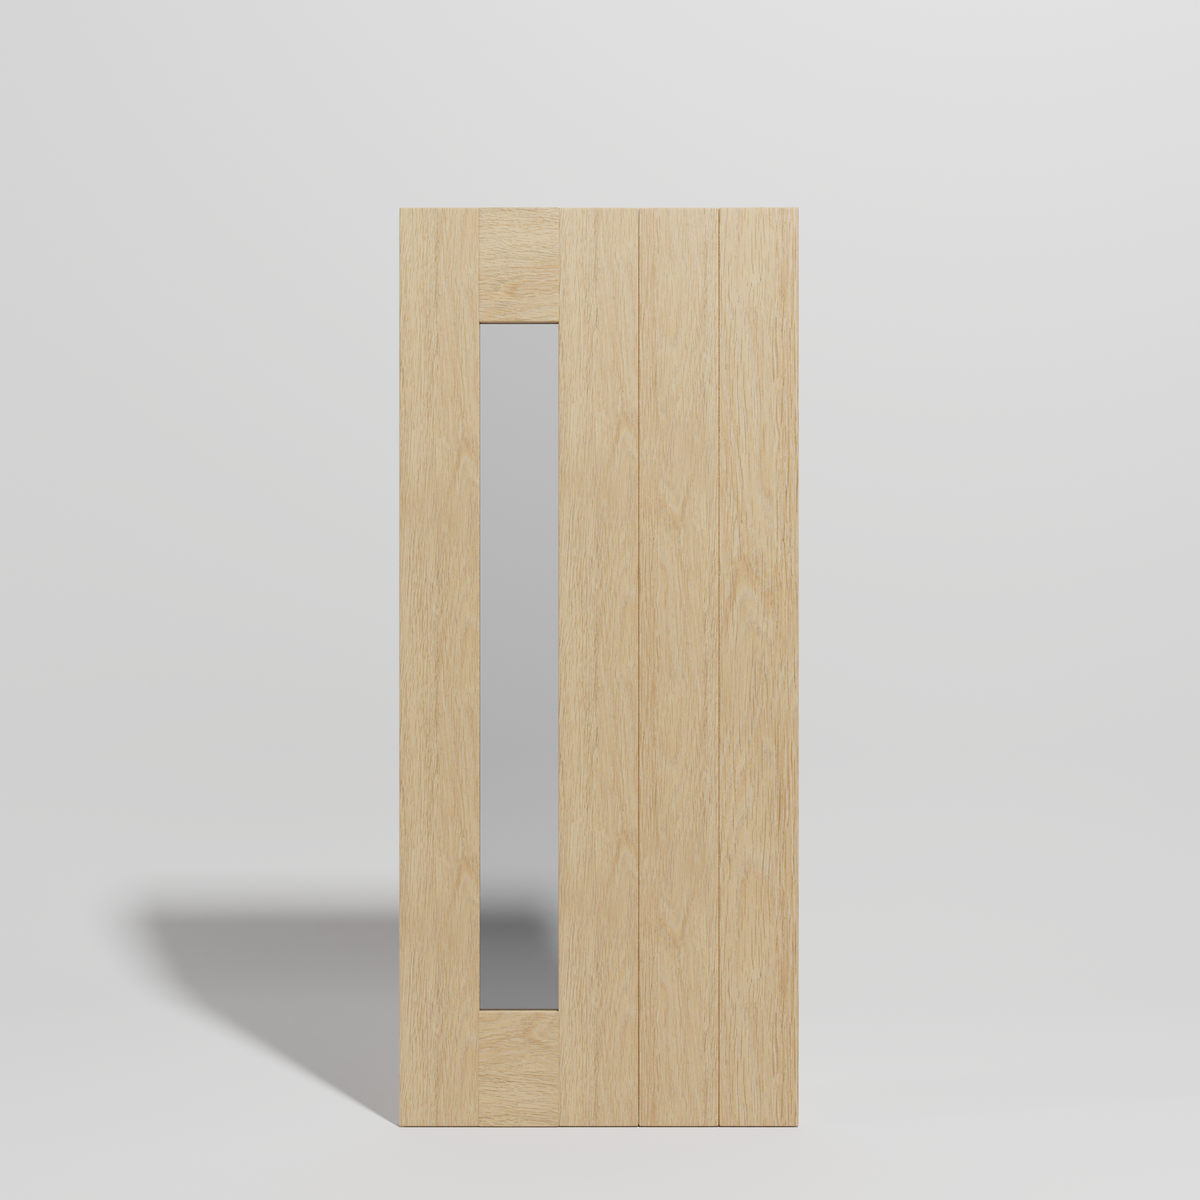 Mid-Century Modern Panel Side Lite Sliding Barn Door design by RealCraft - Barn Door Plank Only